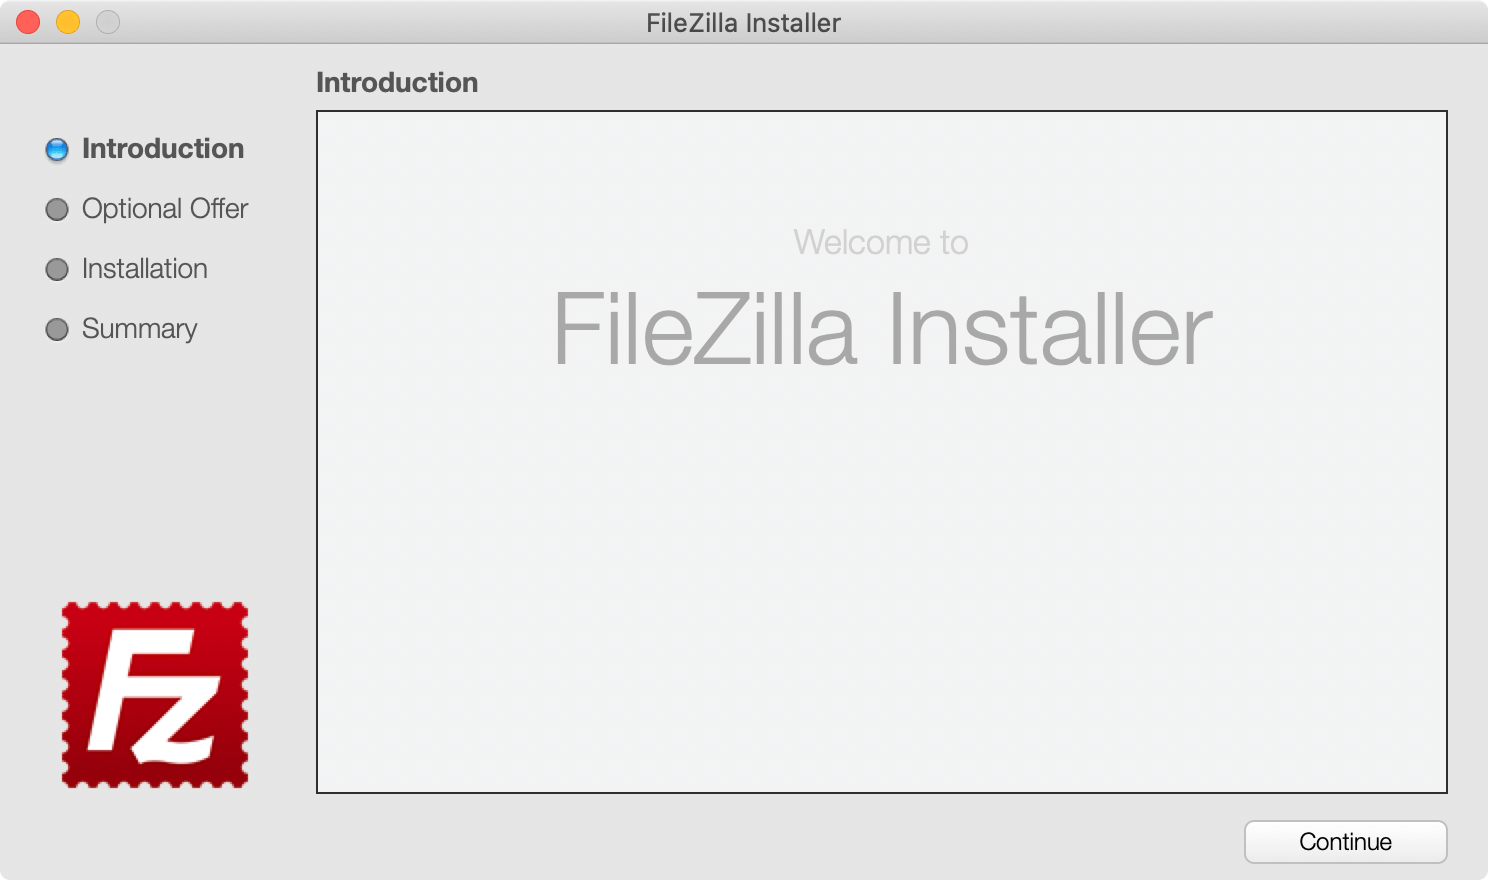 FileZillaのインストール開始